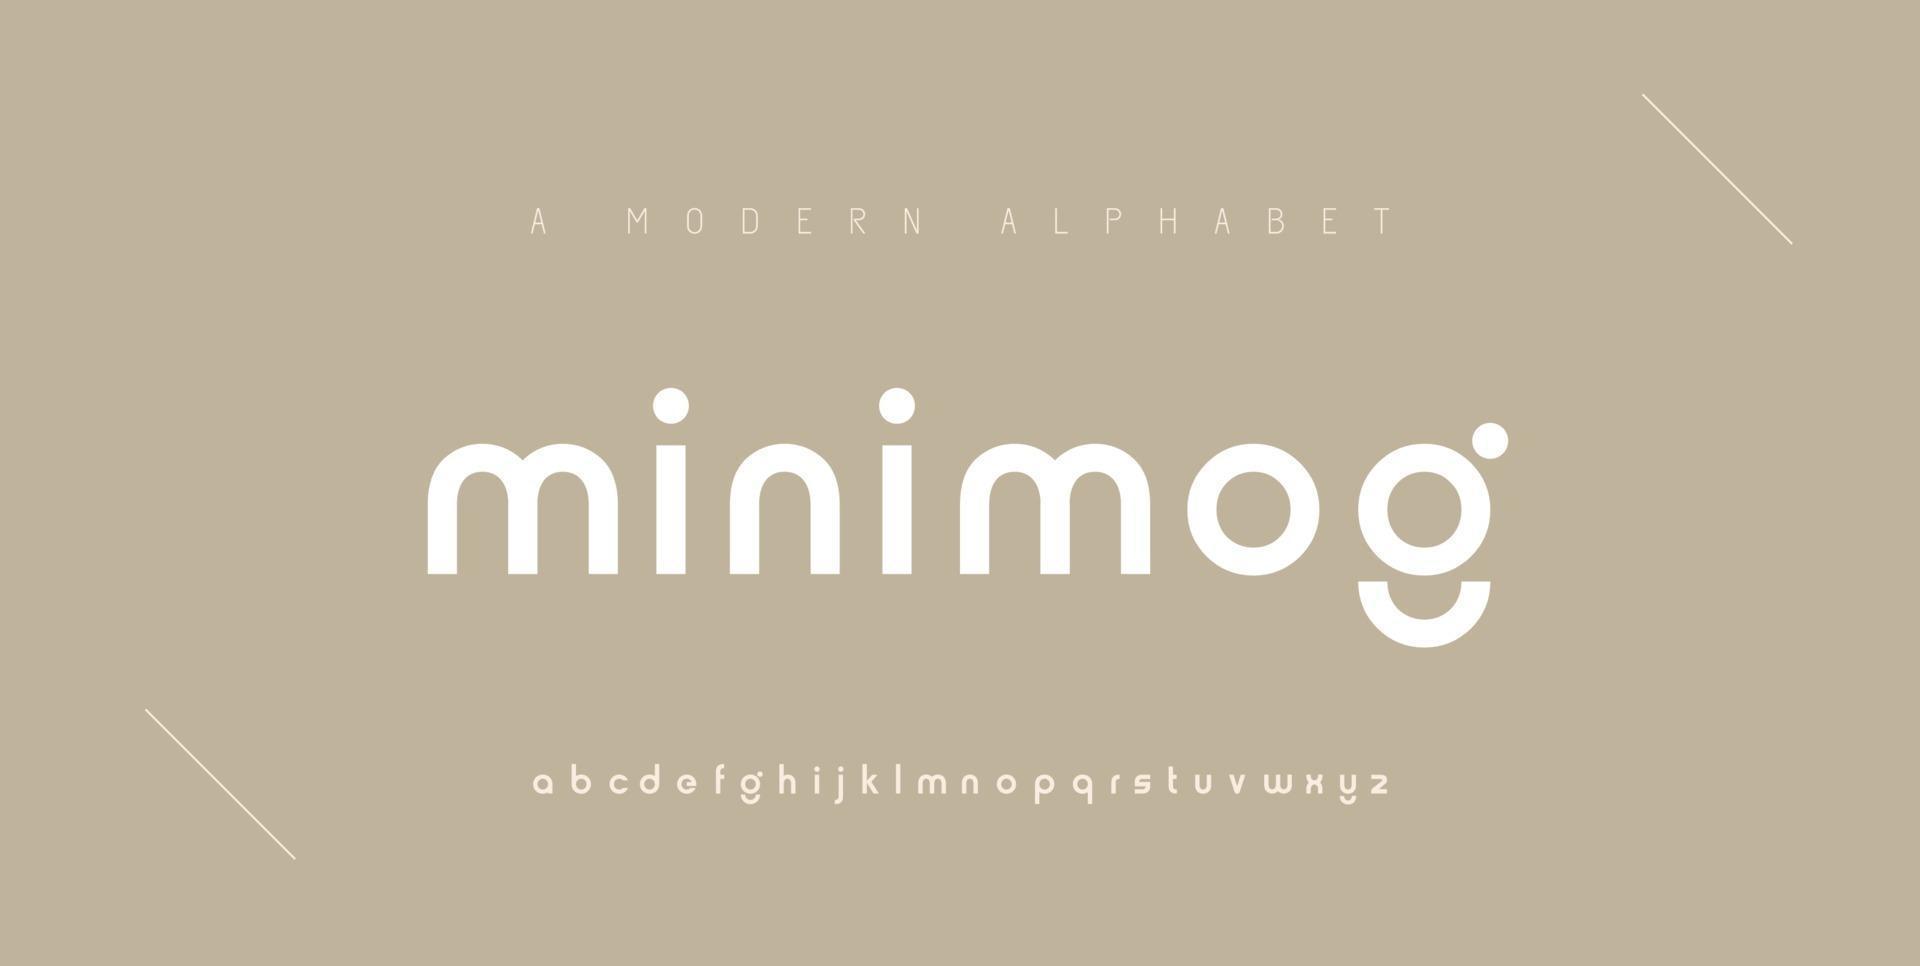 fontes do alfabeto moderno mínimo abstrato. tipografia minimalista urbana digital moda futuro criativo logo fonte. vetor